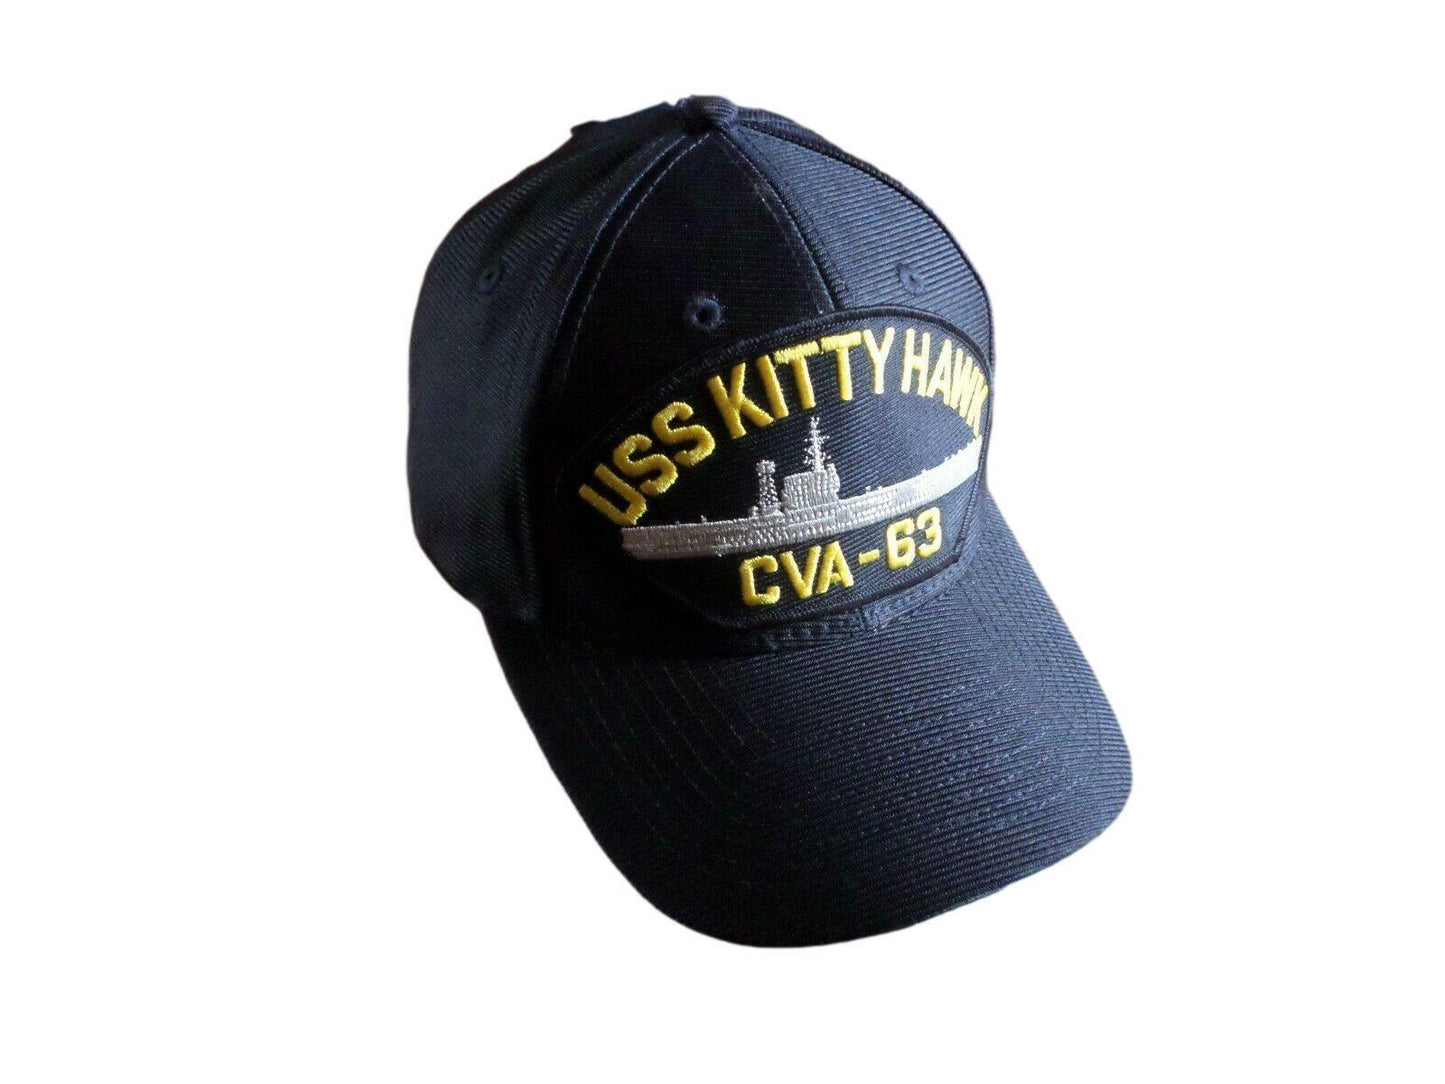 USS KITTY HAWK CVA-63 NAVY SHIP HAT U.S MILITARY OFFICIAL BALL CAP U.S.A MADE